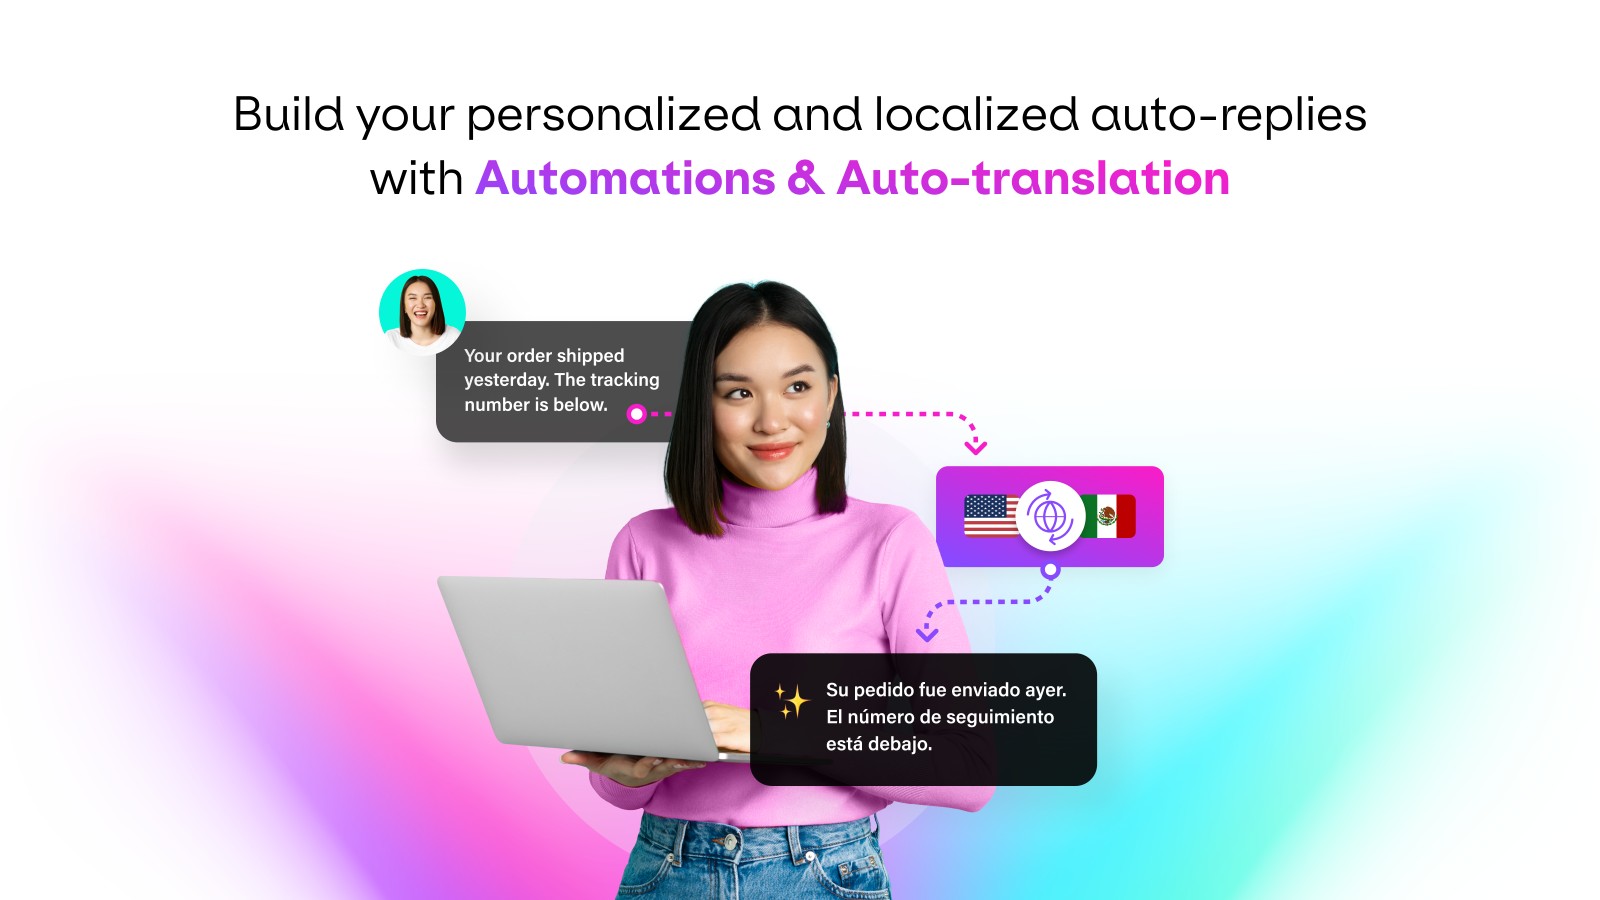 Automations & Auto-translation